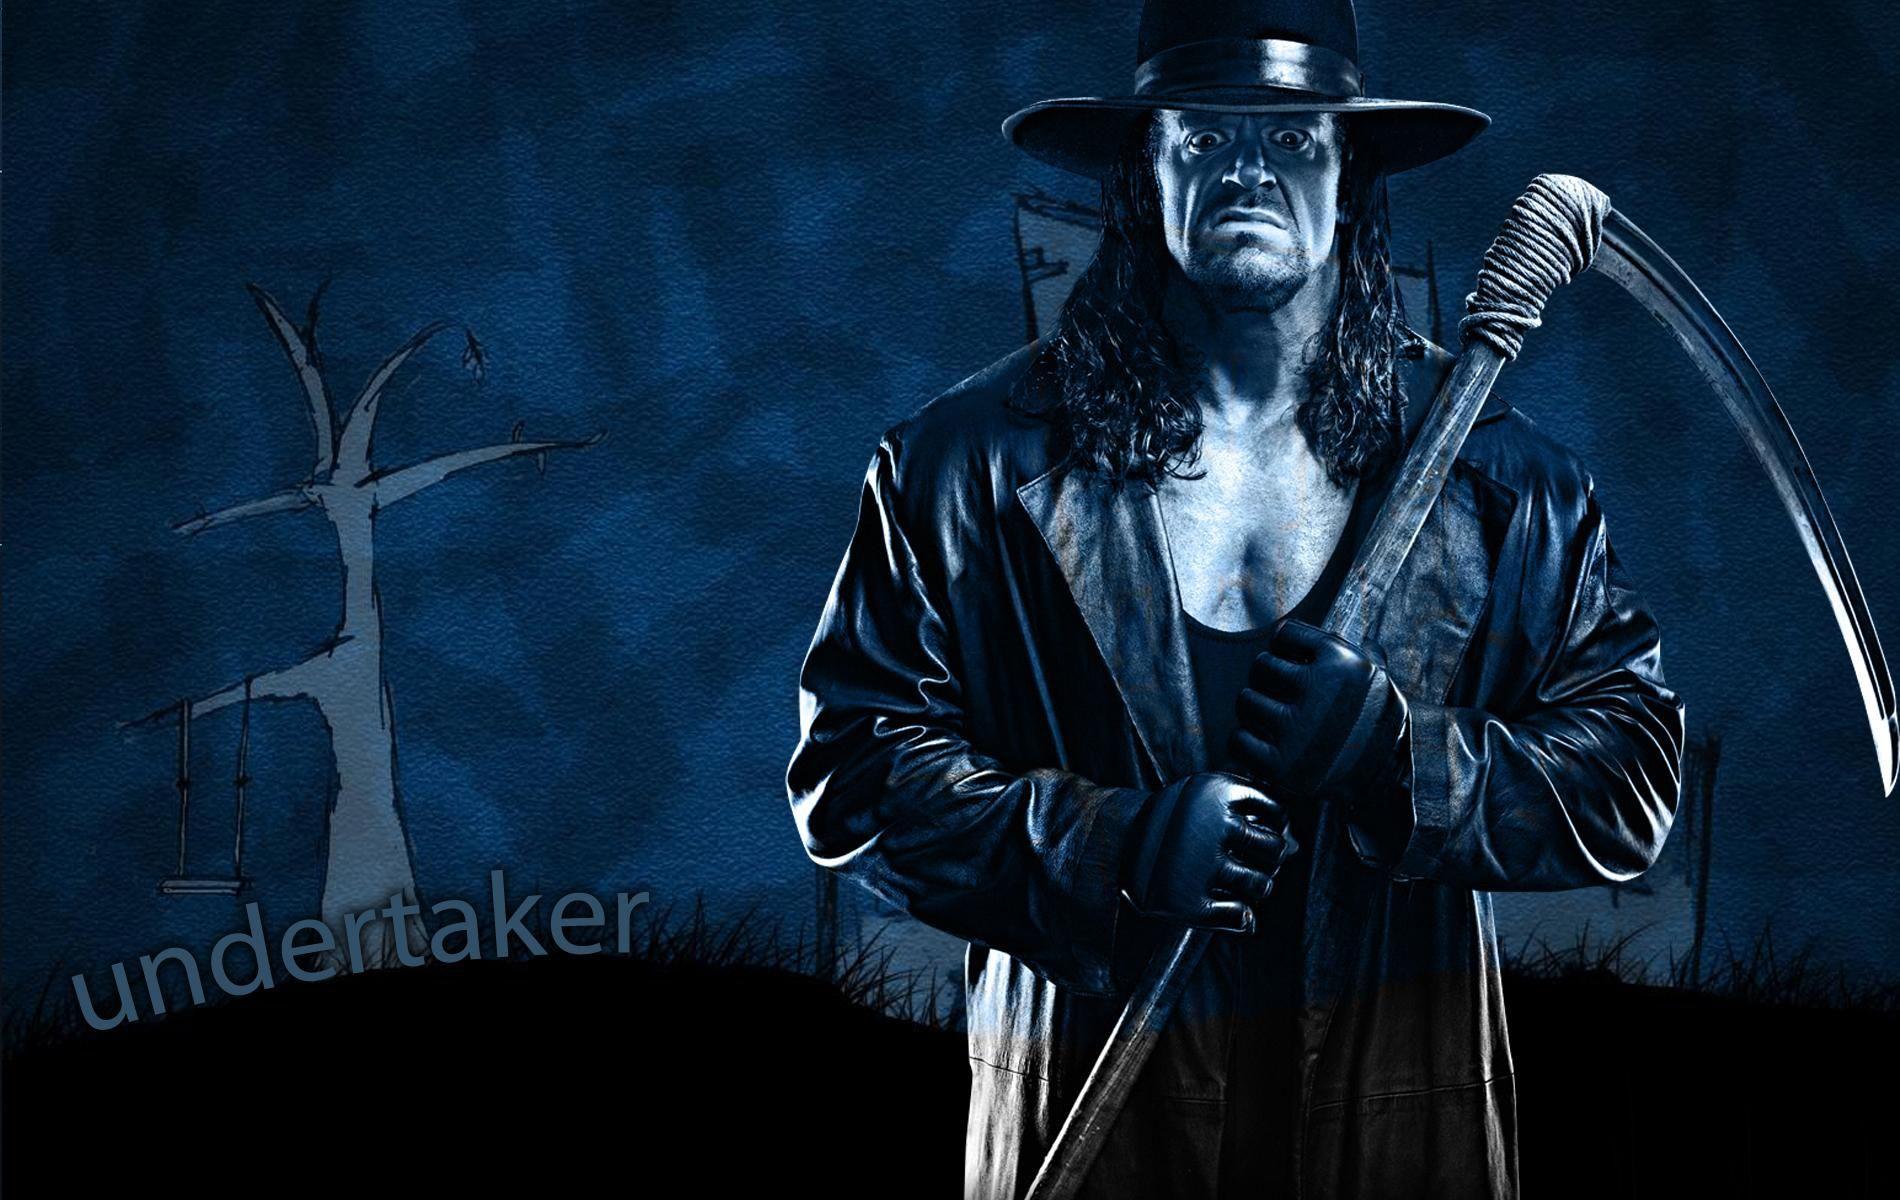 undertaker free HD wallpaper and image (10) Wallpaper HD